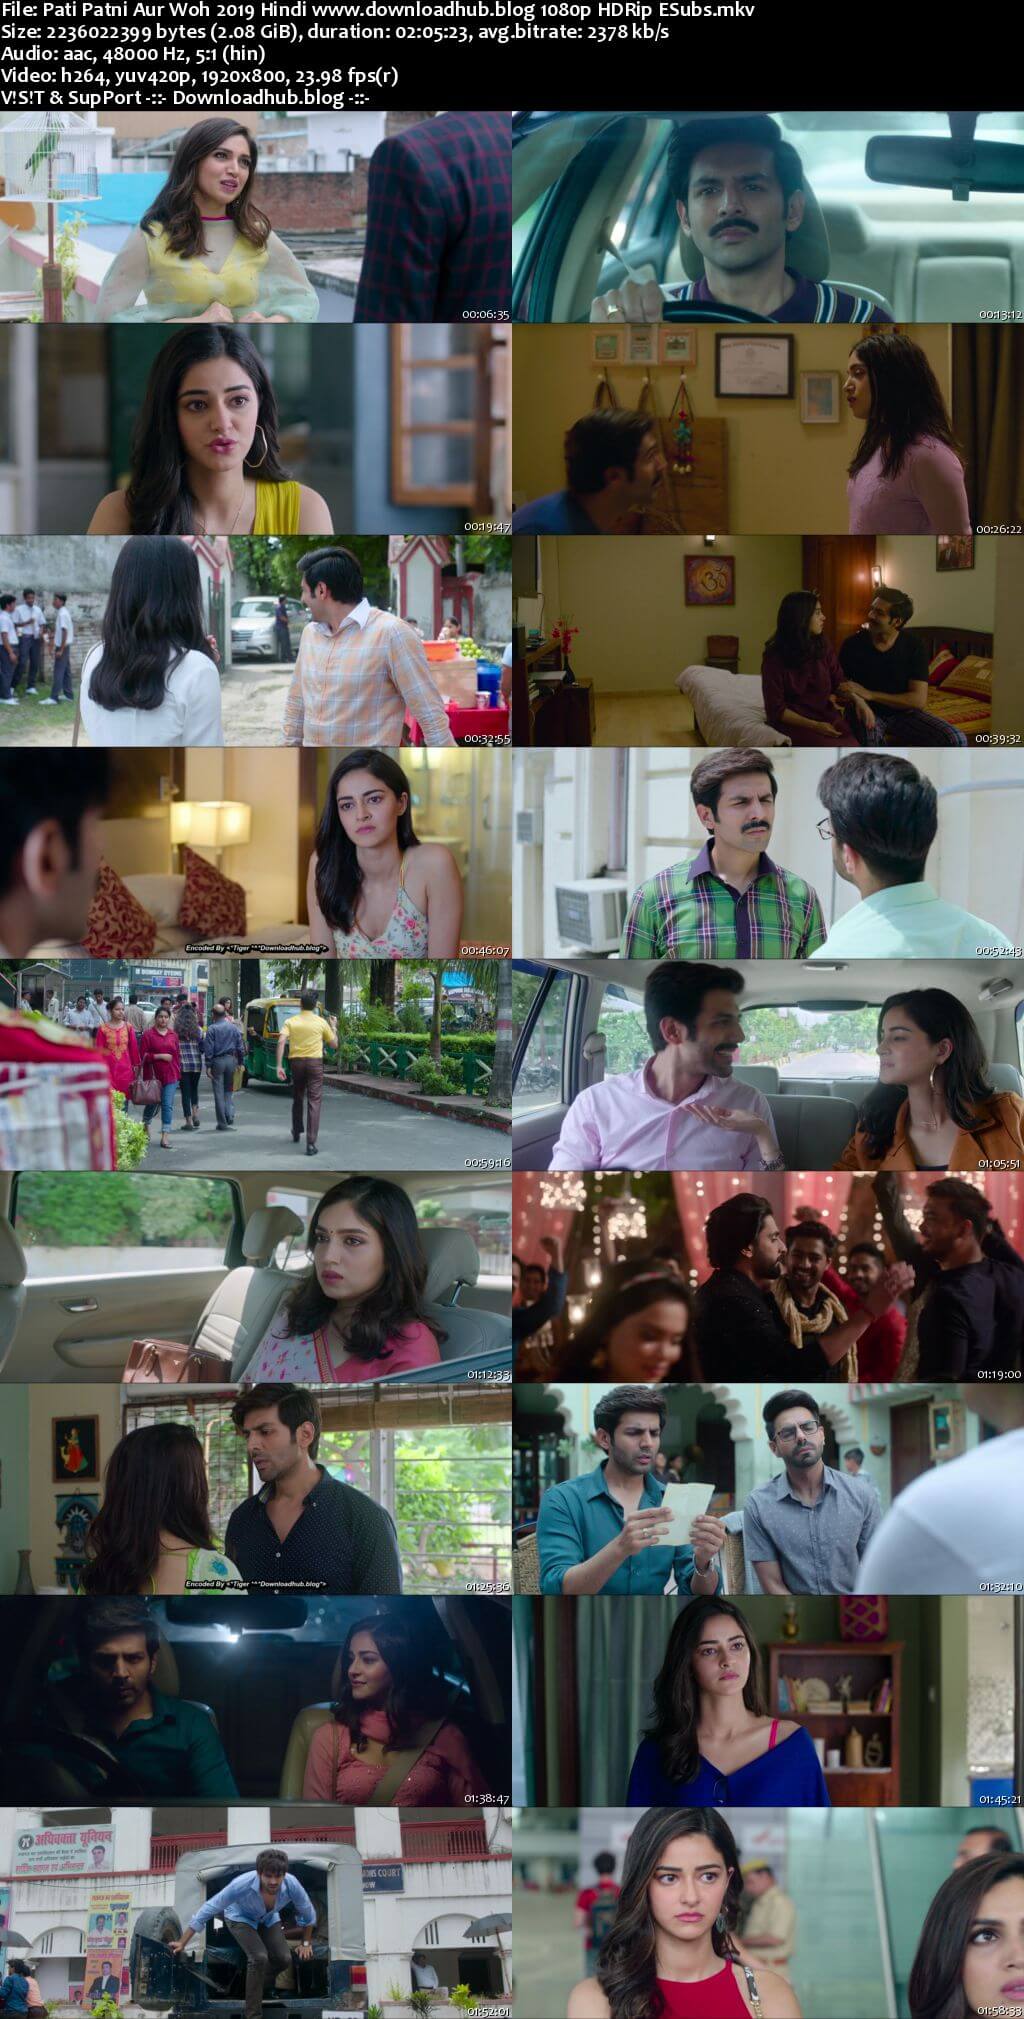 Pati Patni Aur Woh 2019 Hindi 1080p HDRip ESubs